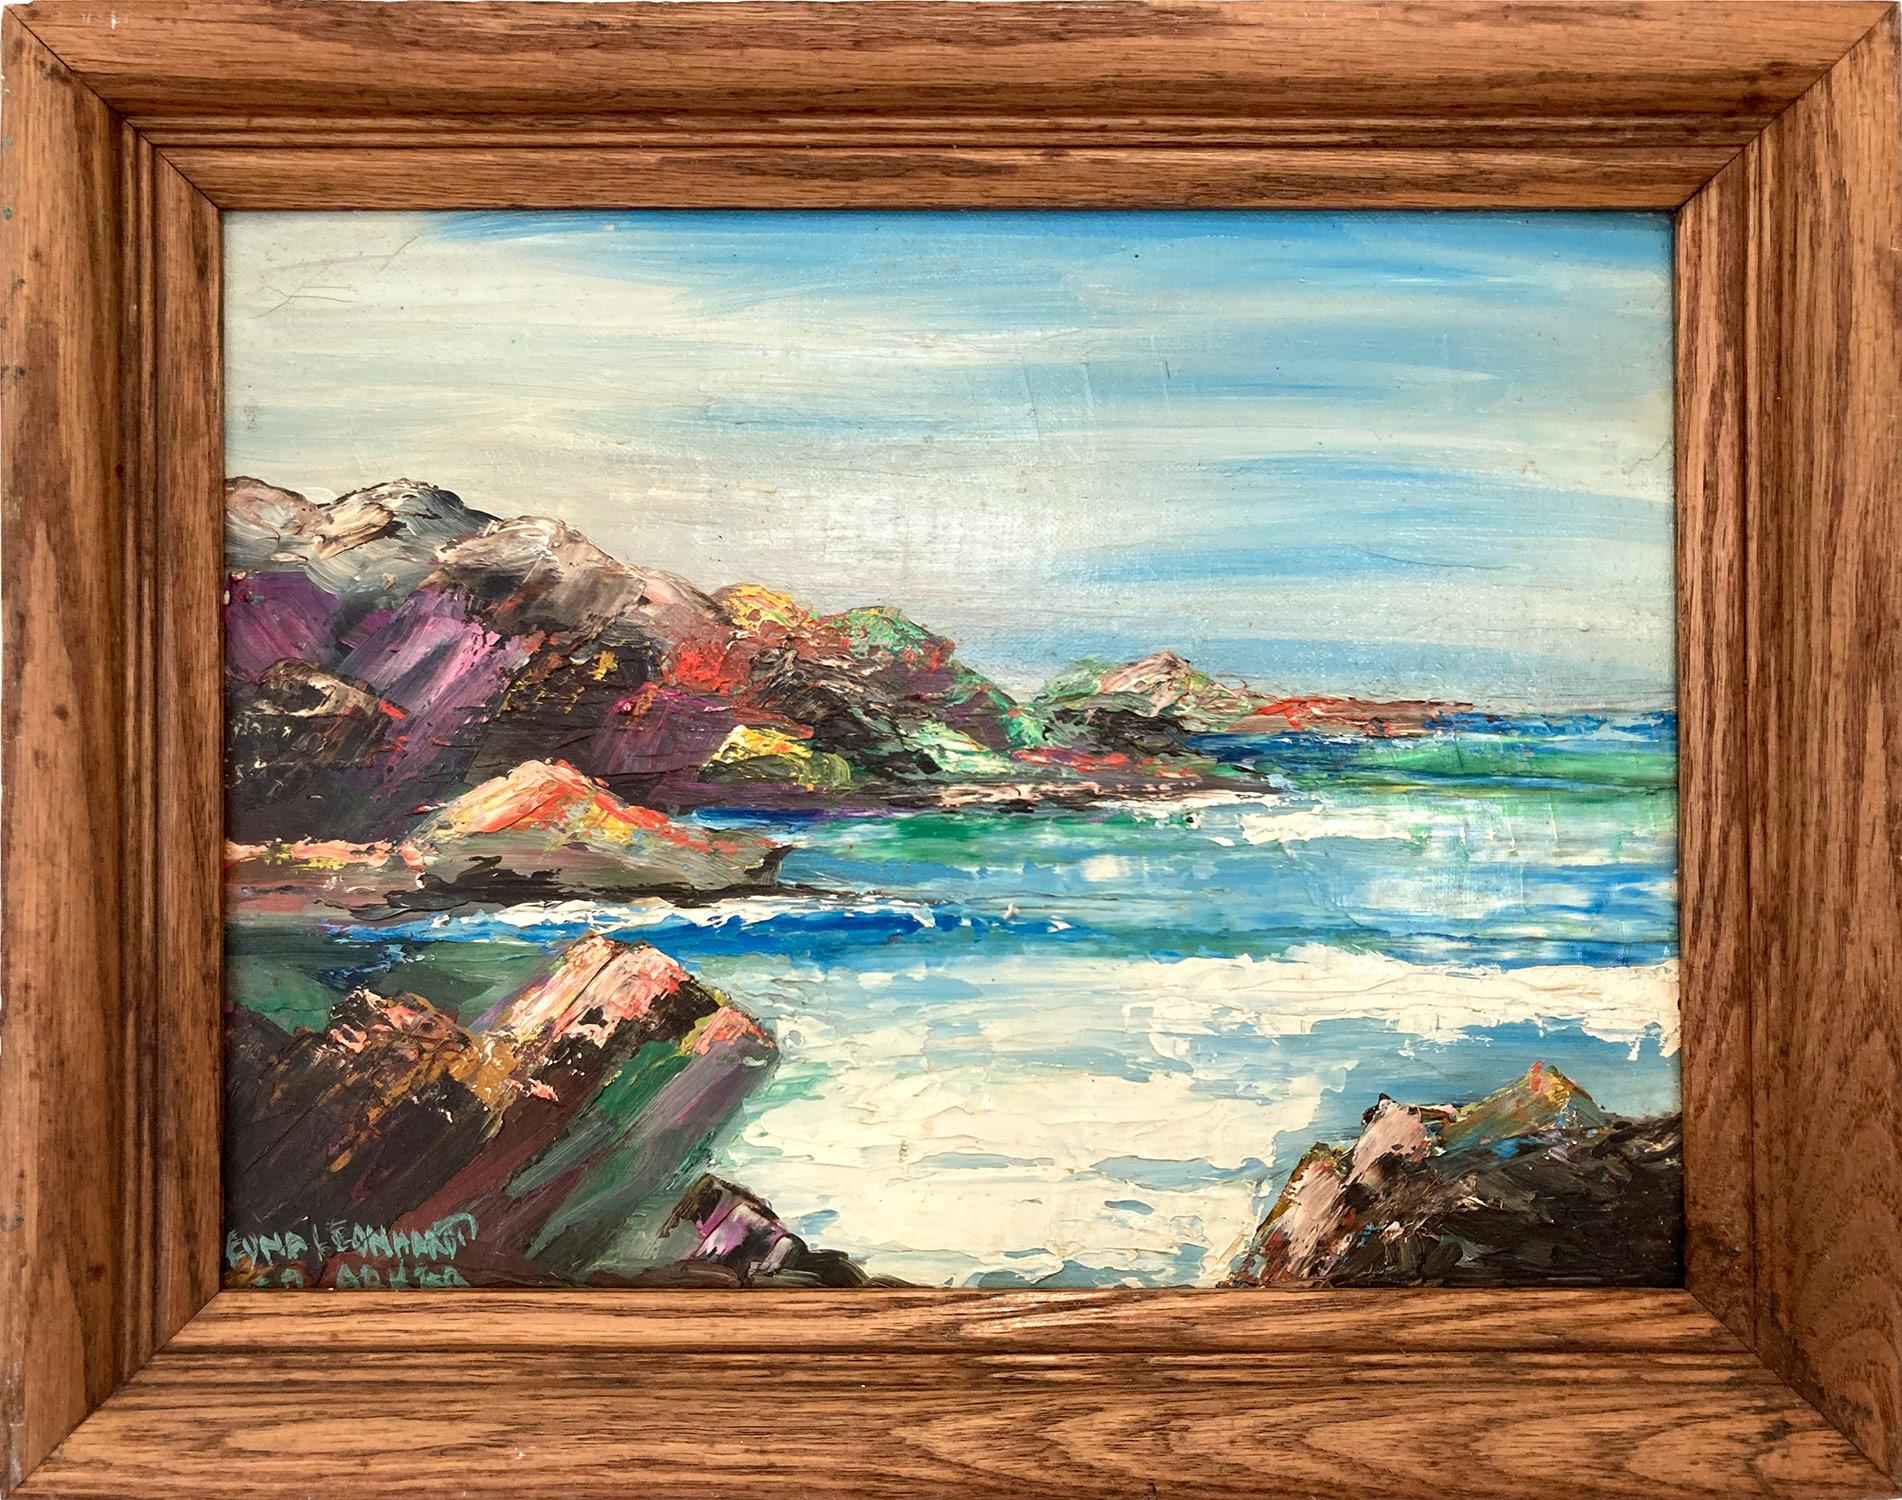 Edna Leonhardt Acker Landscape Painting - "Costal Landscape Scene" Post-Impressionist Oil Paint on Canvas of Coast